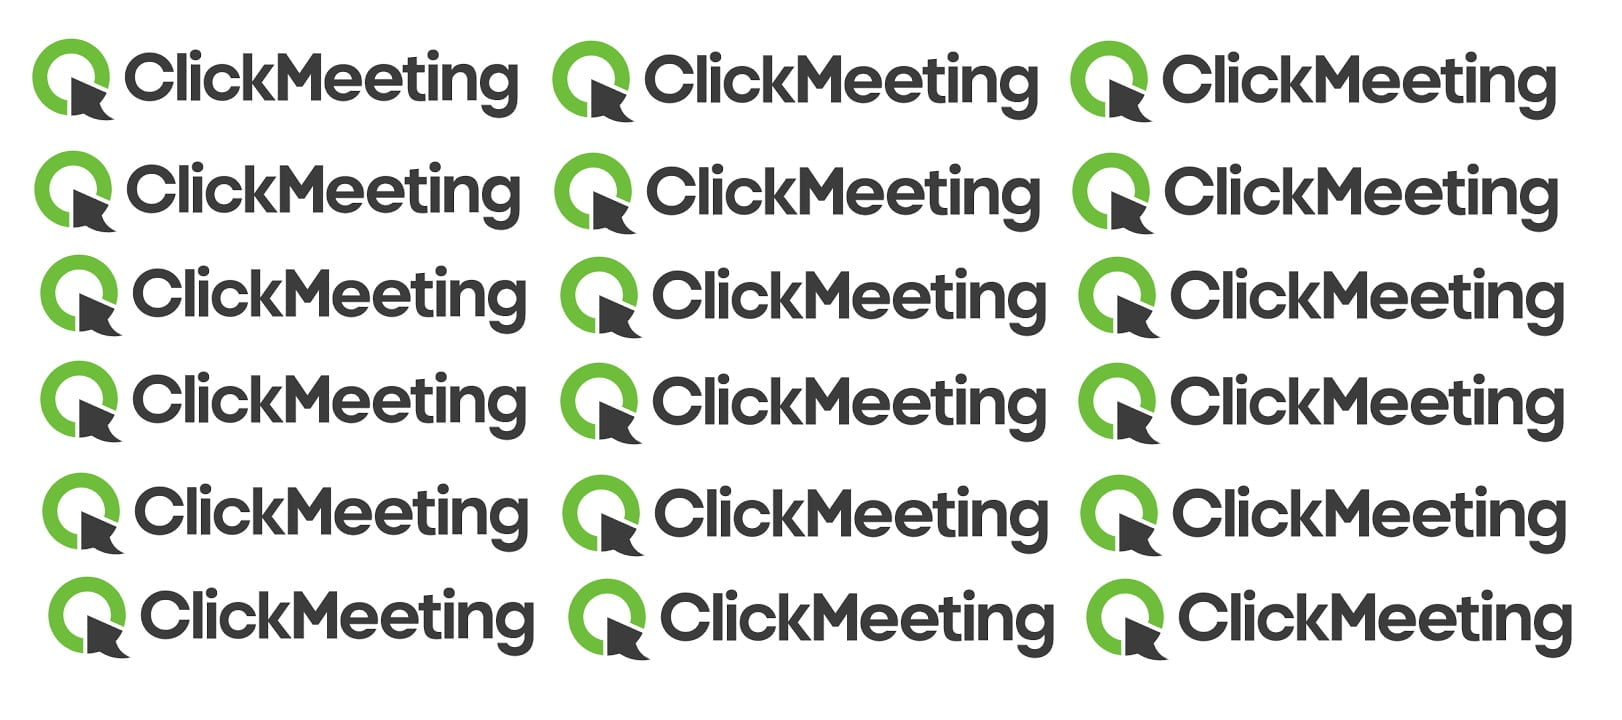 ClickMeeting 31 mln uczestników